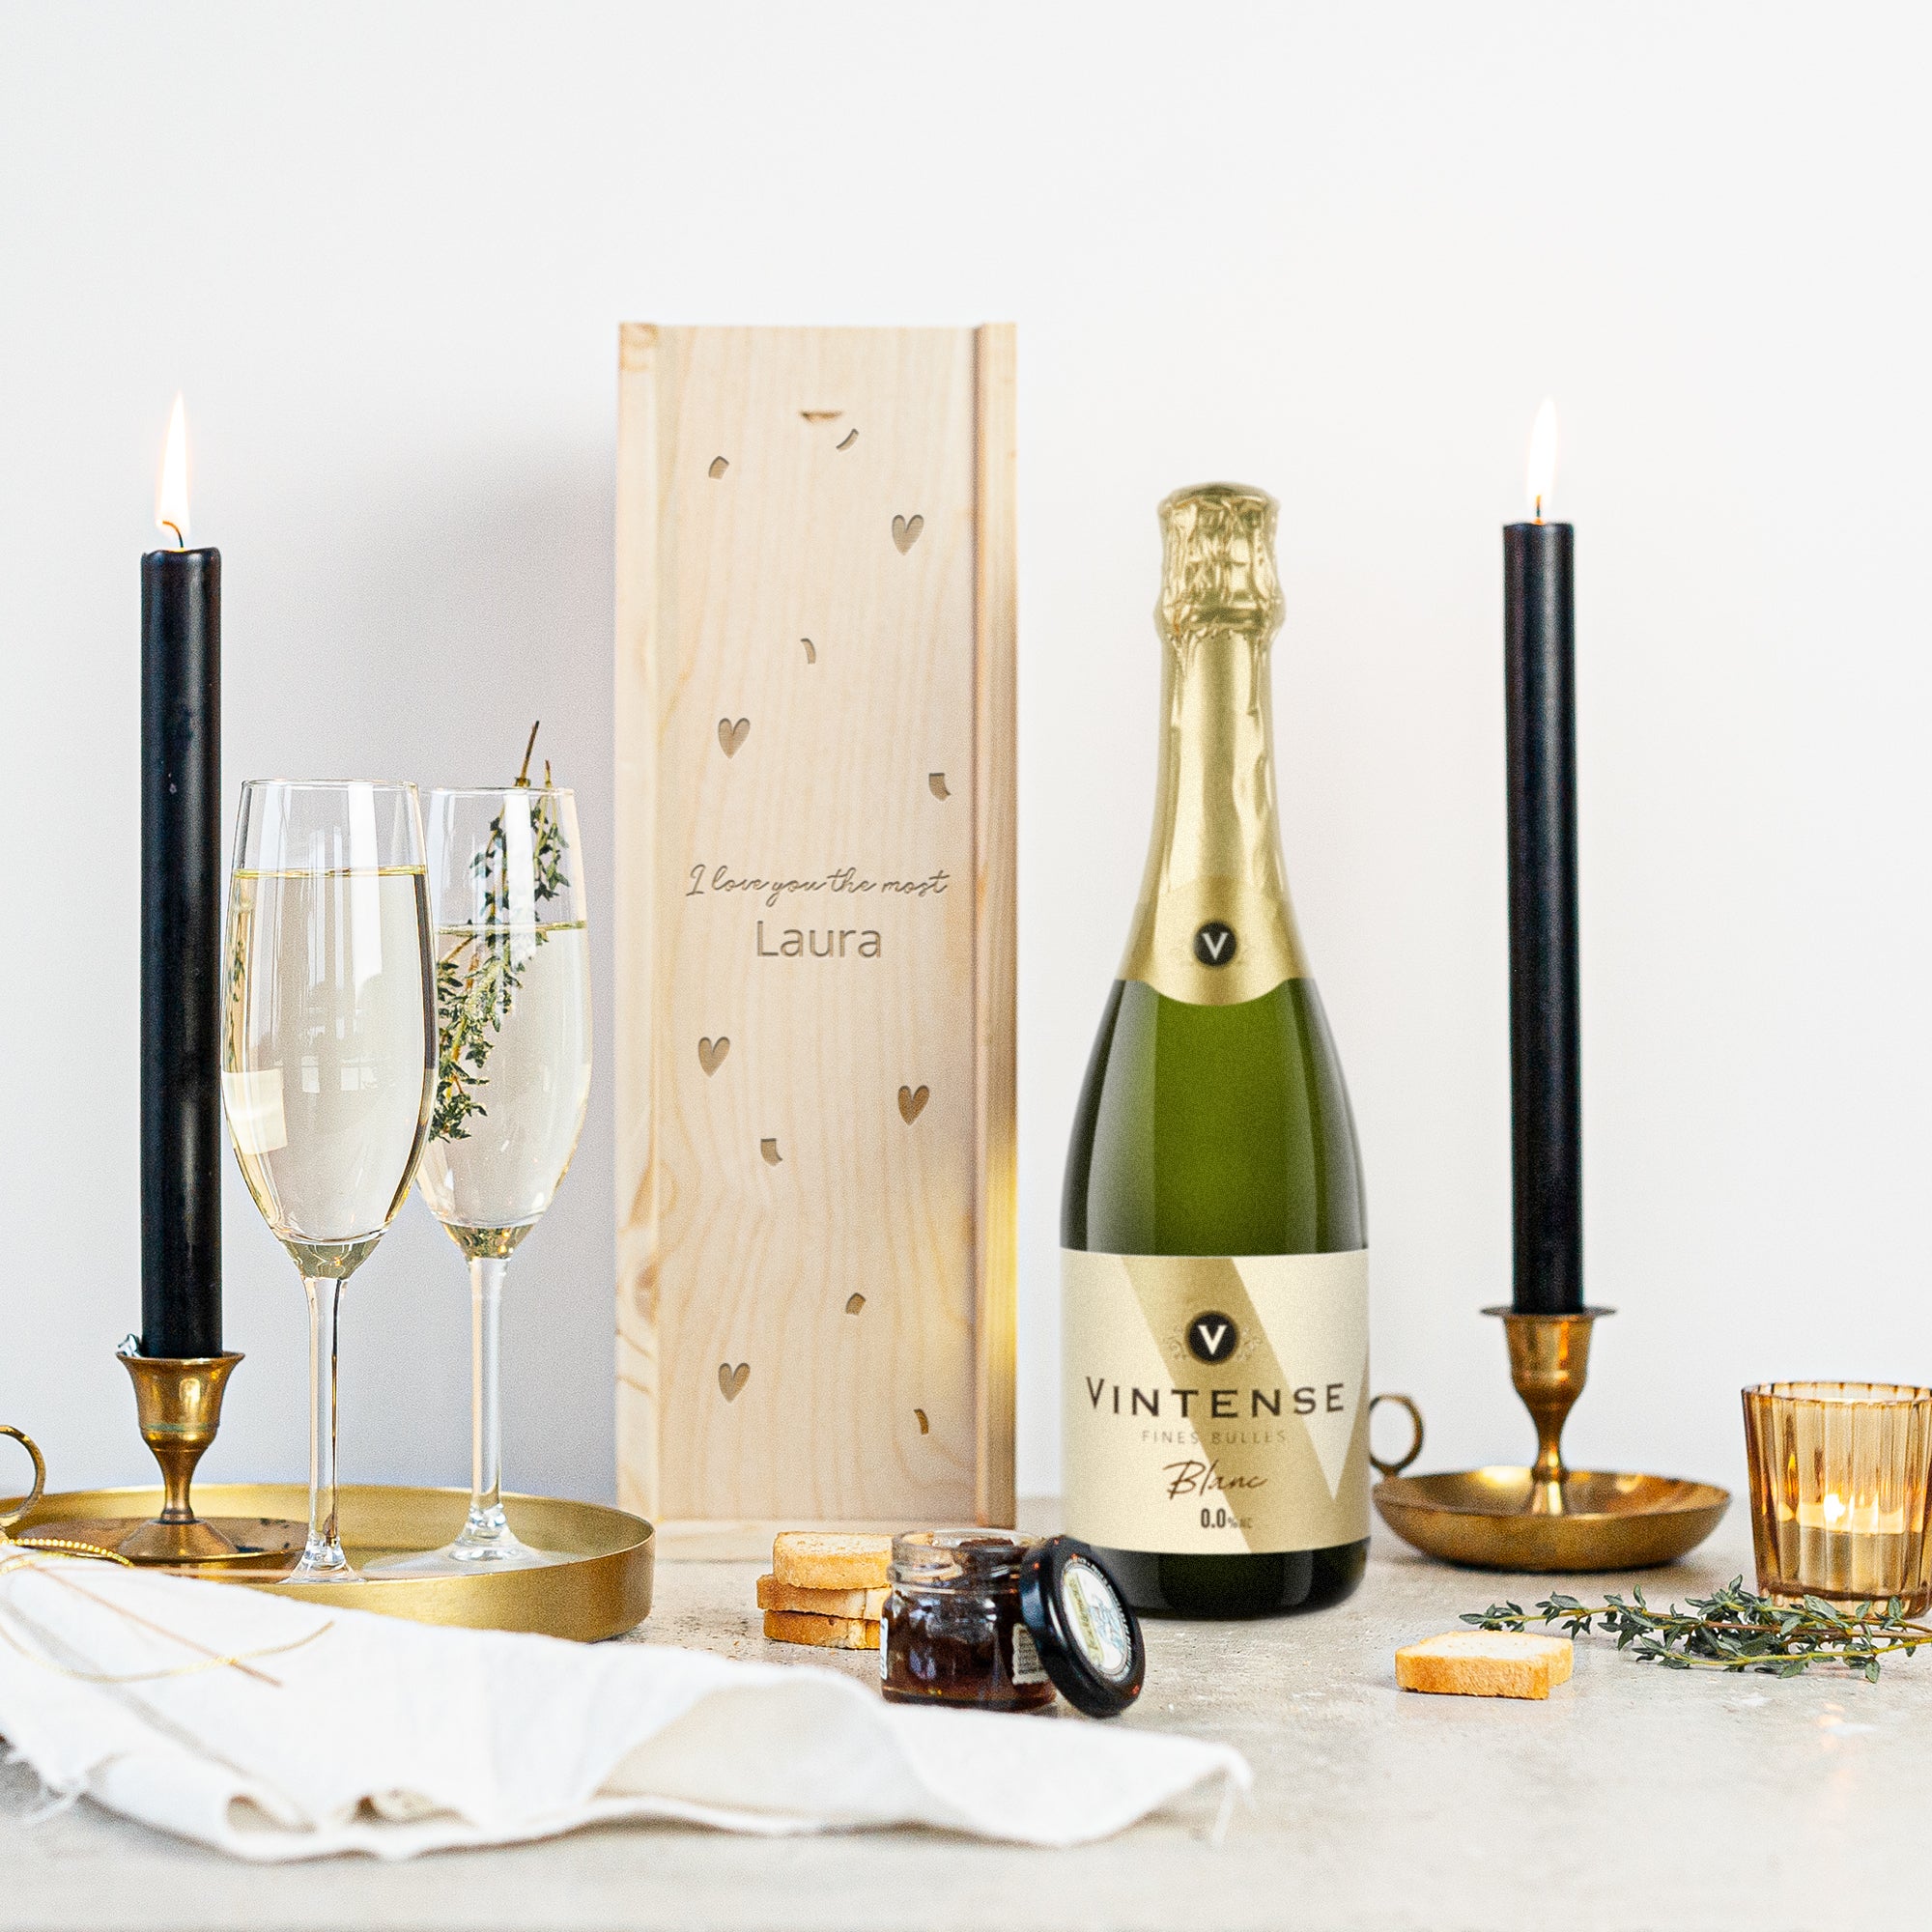 Personalised wine gift - Vintense Blanc Fines Bulles - Engraved wooden case